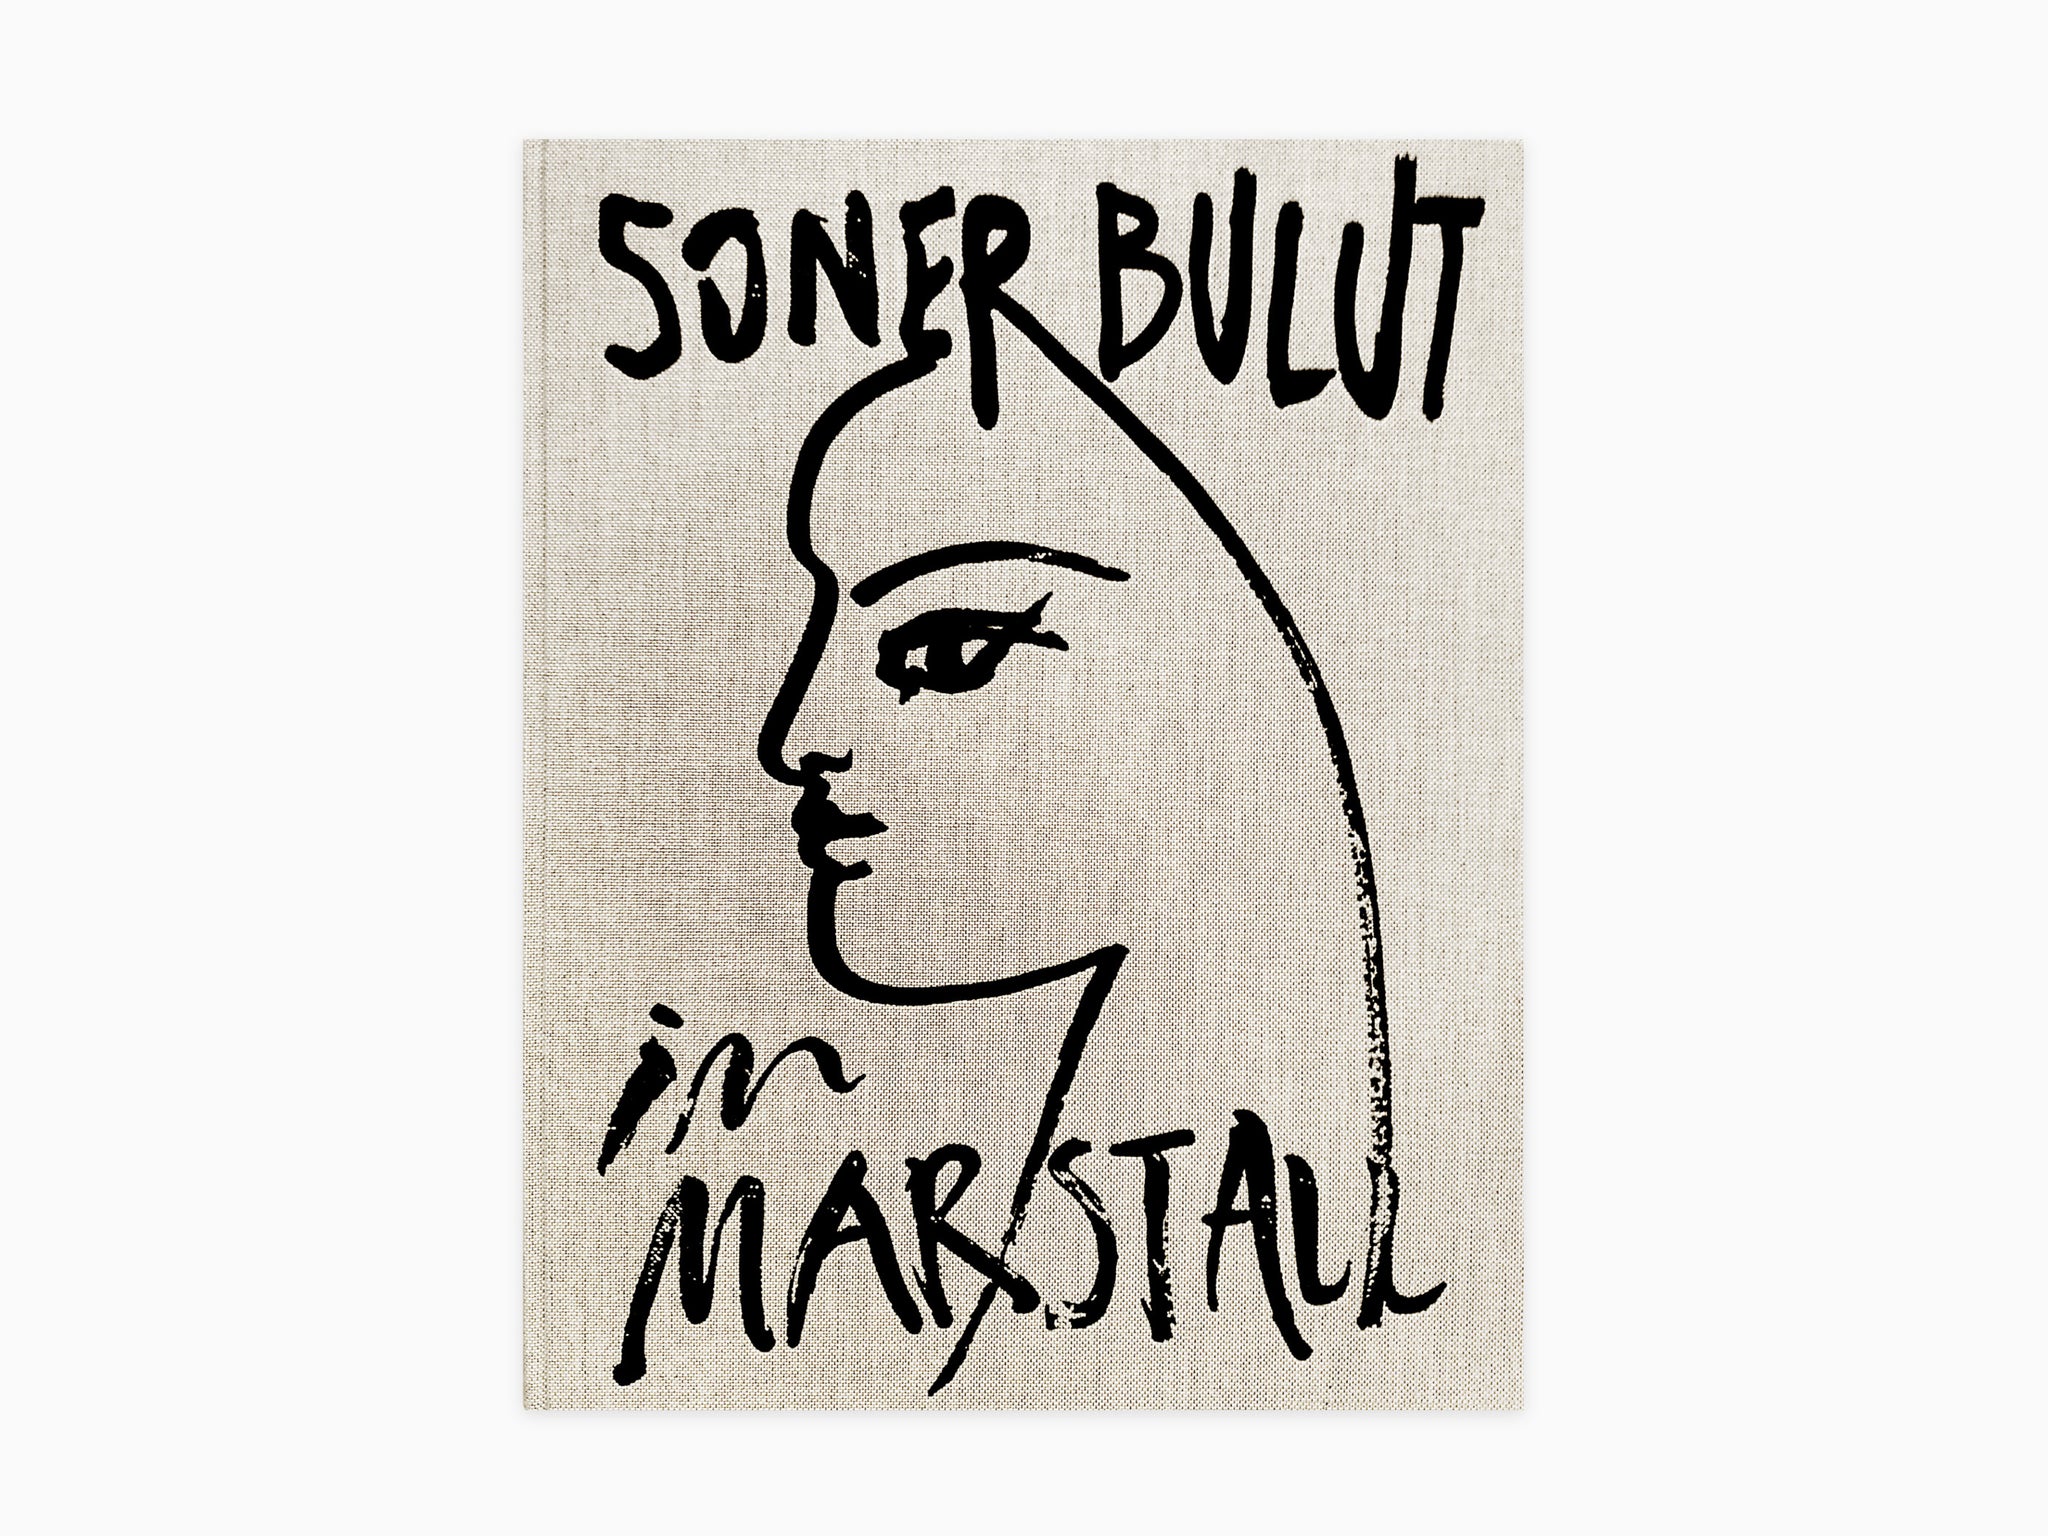 Xoner - Exhibition catalogue "Soner Bulut im Marstall"